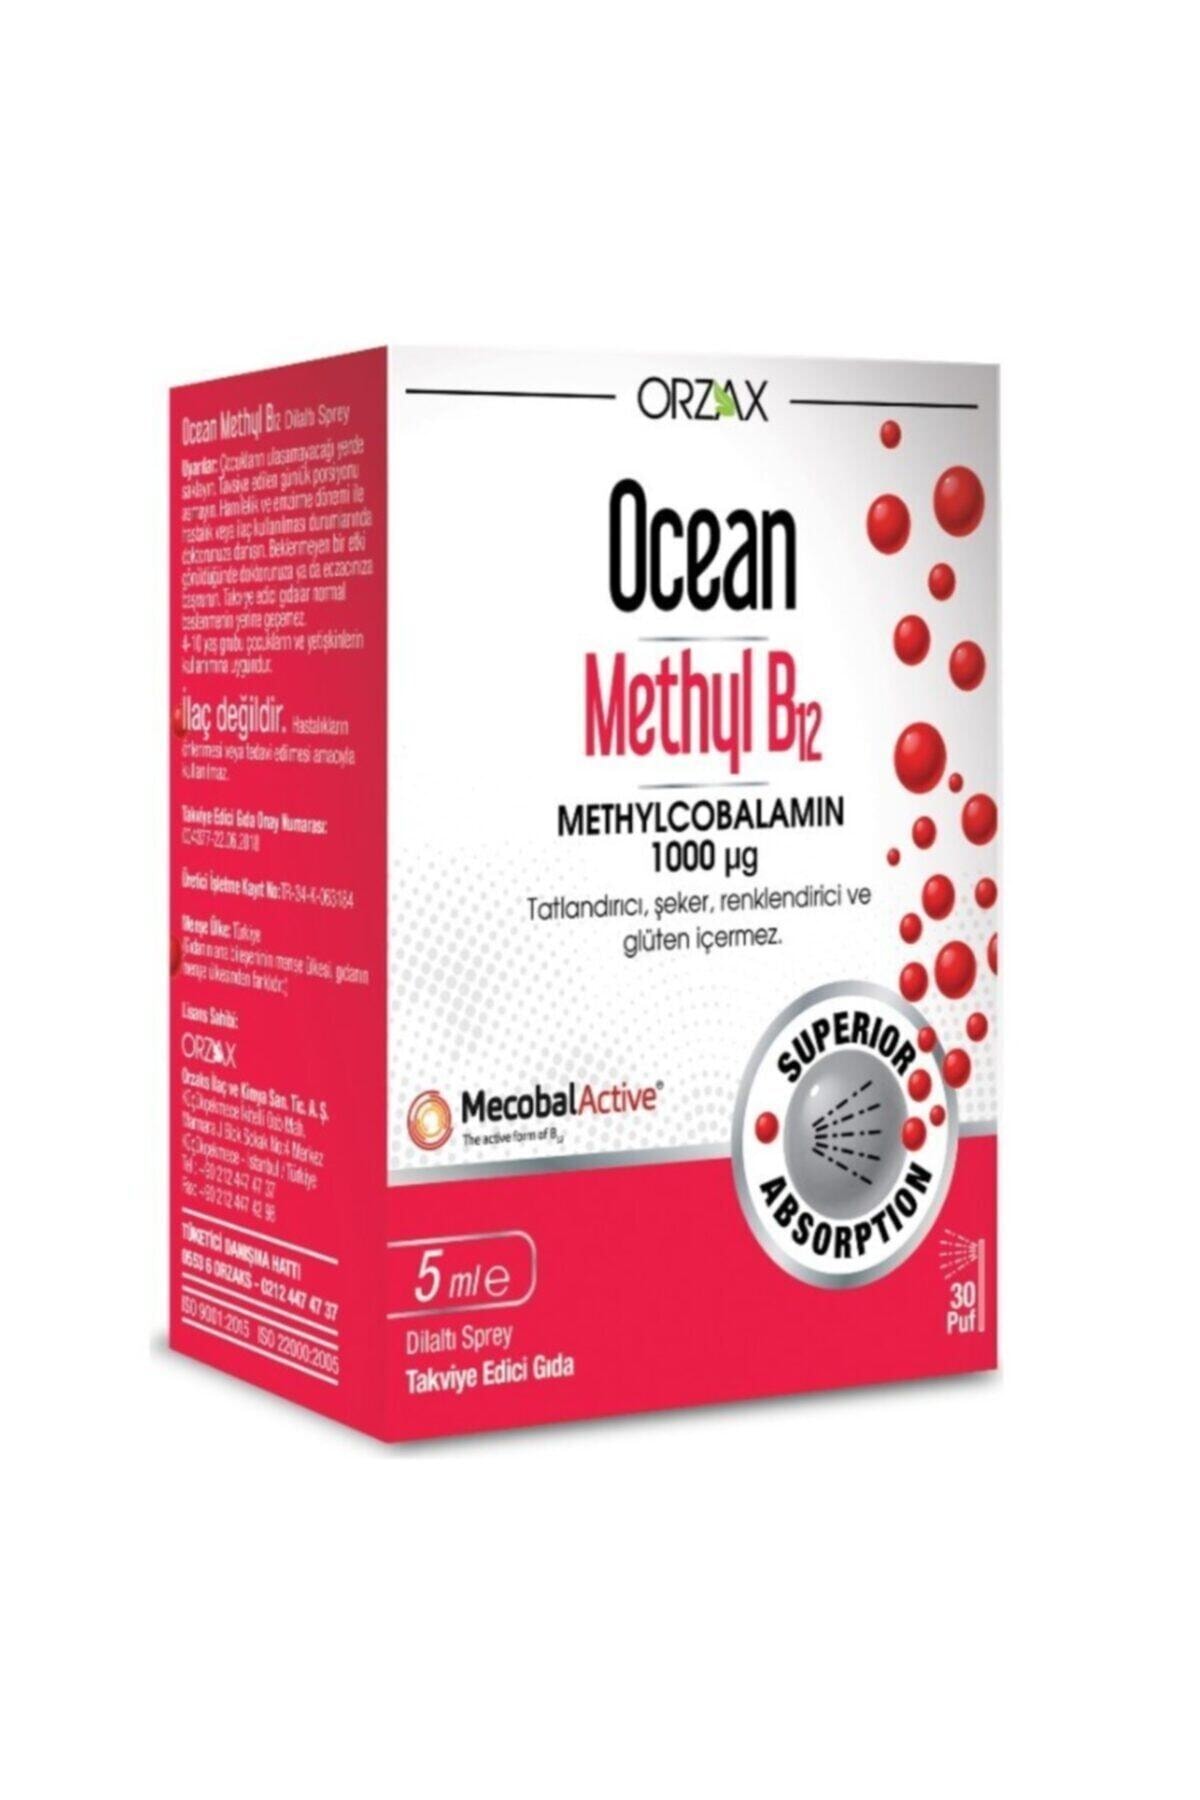 Ocean Methyl B12 1000 Mcg Methylcobalamin 5 ml